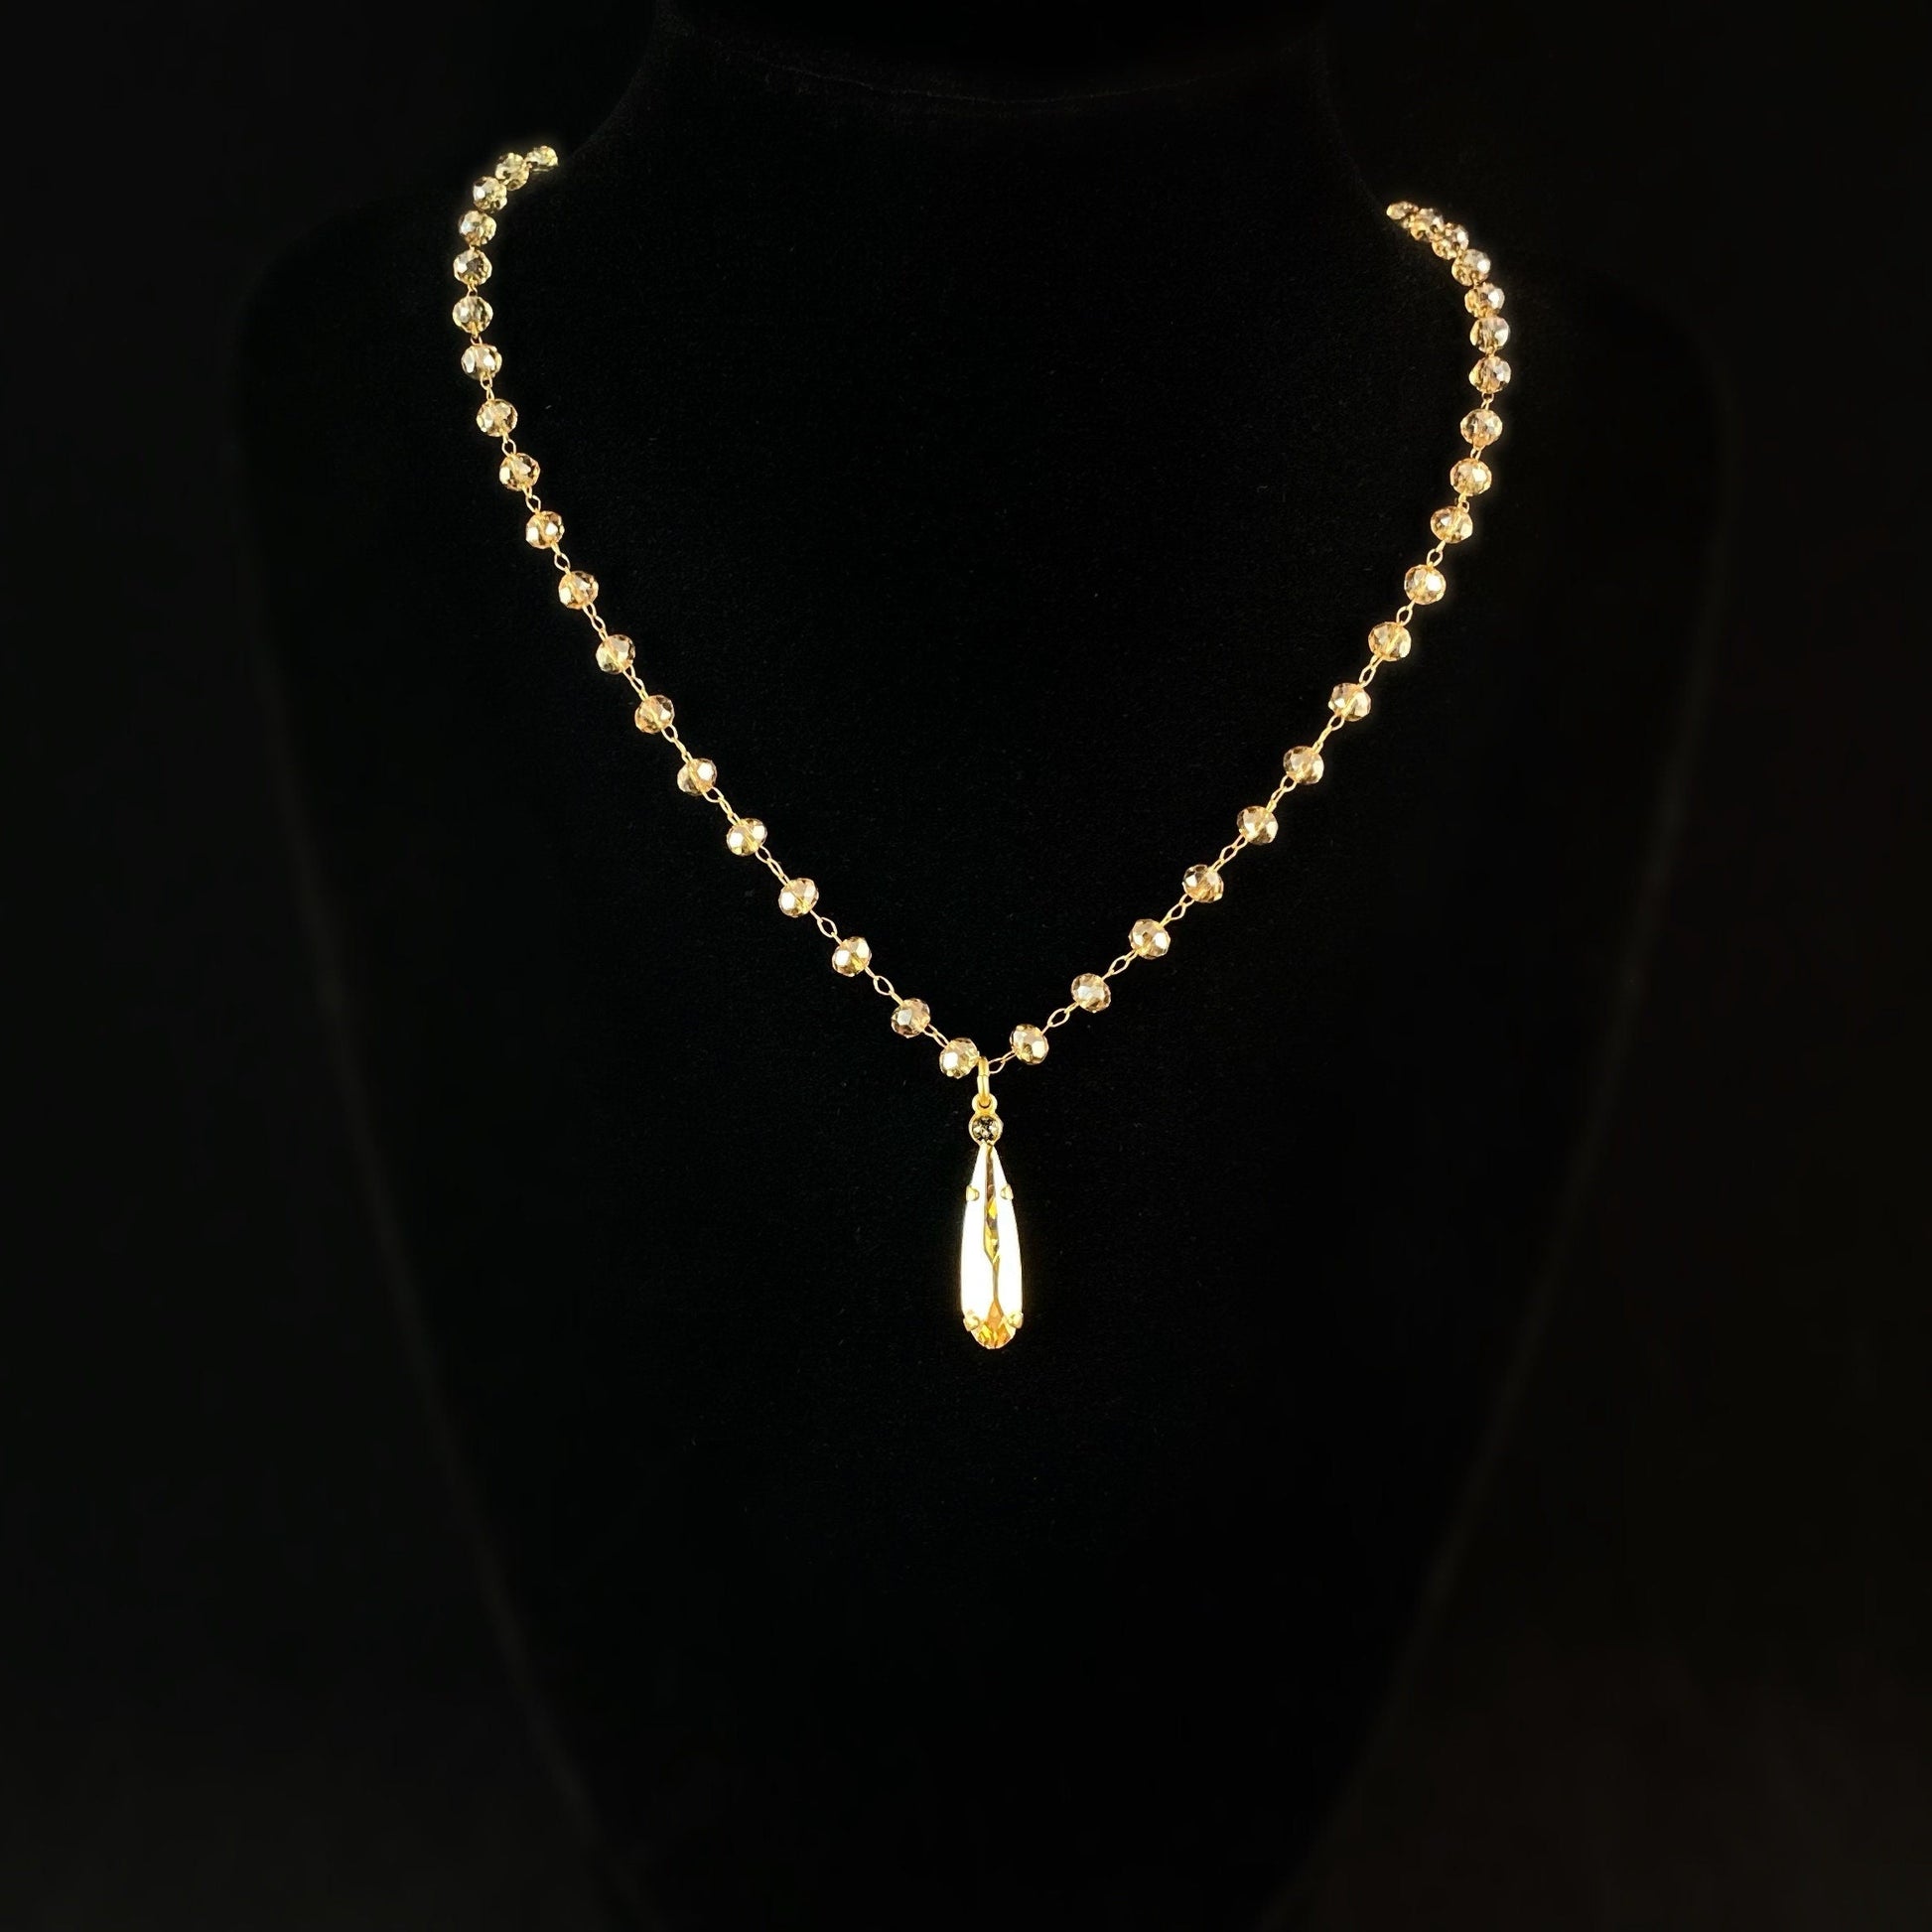 Beaded Crystal Teardrop Necklace - La Vie Parisienne by Catherine Popesco